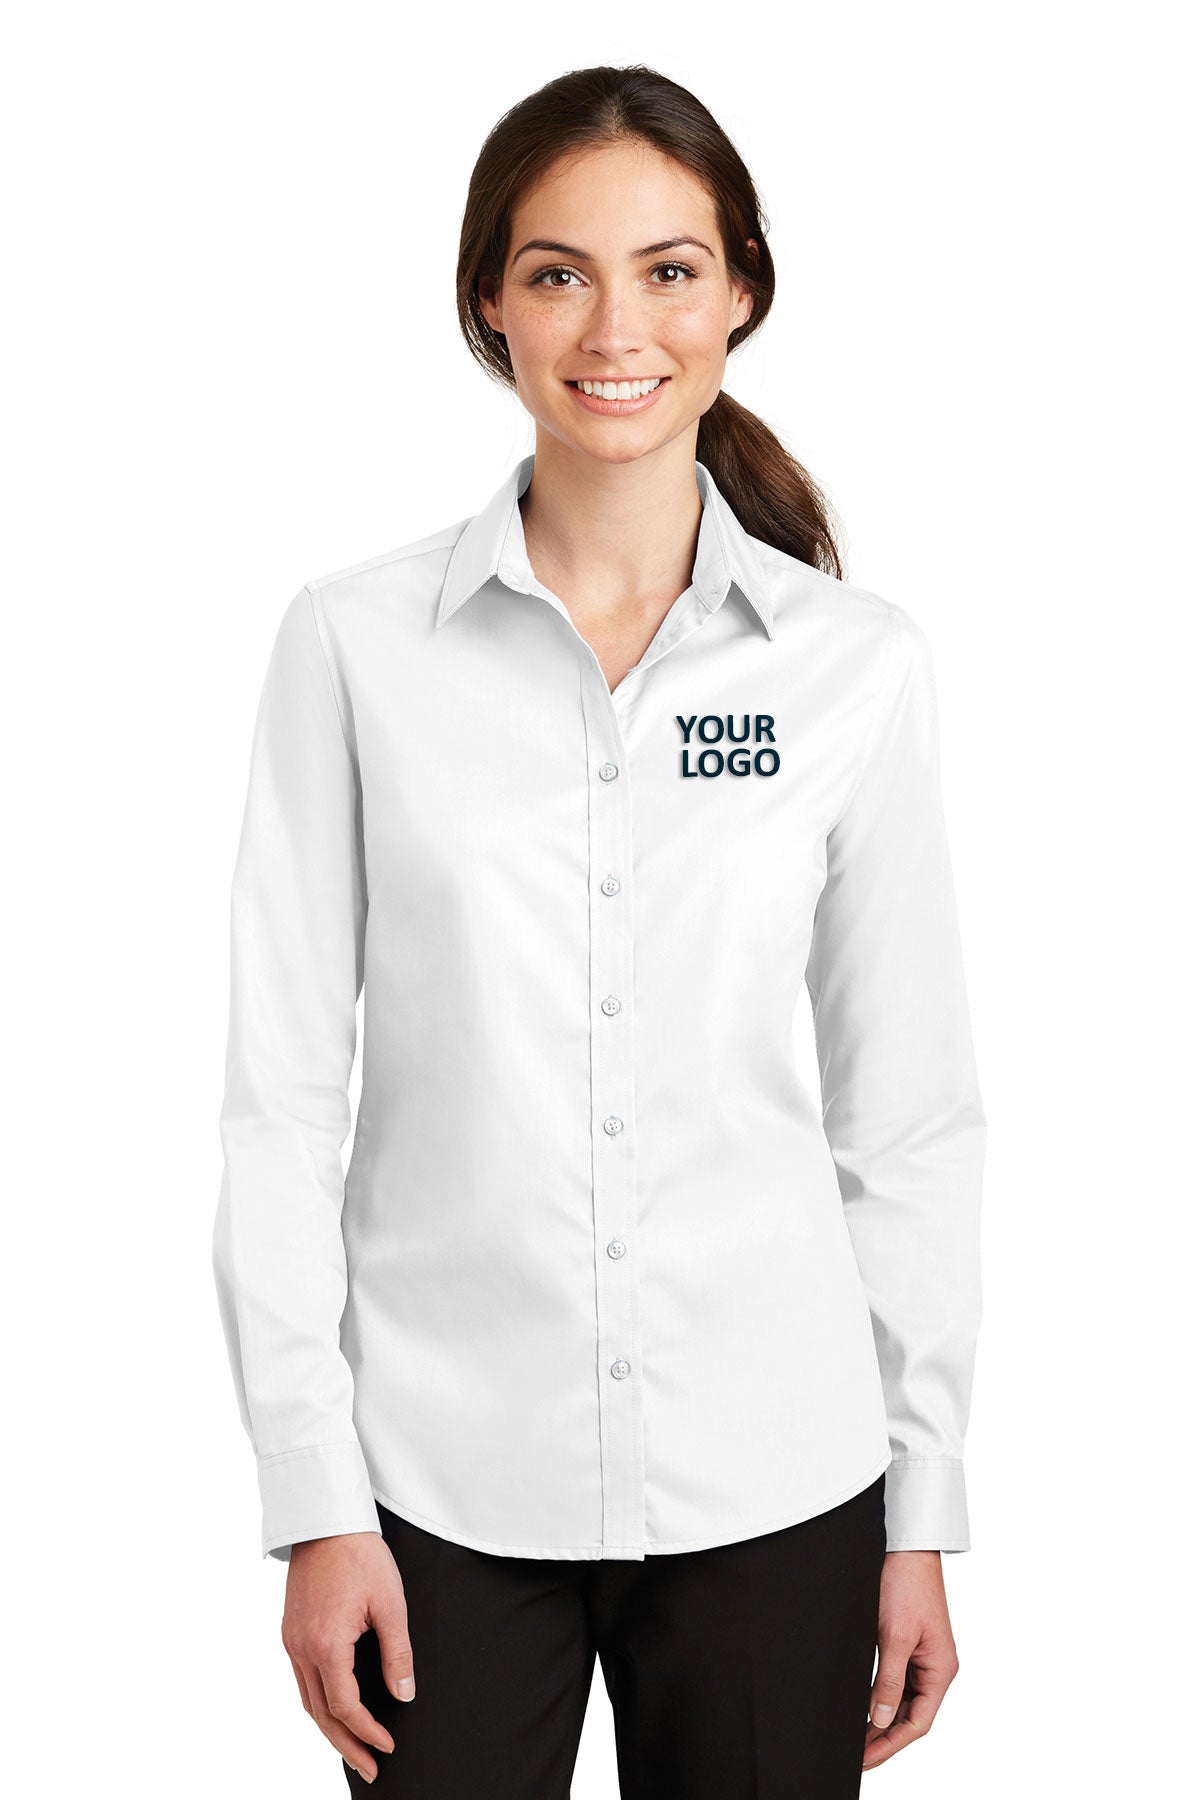 Port Authority White L663 custom work shirts